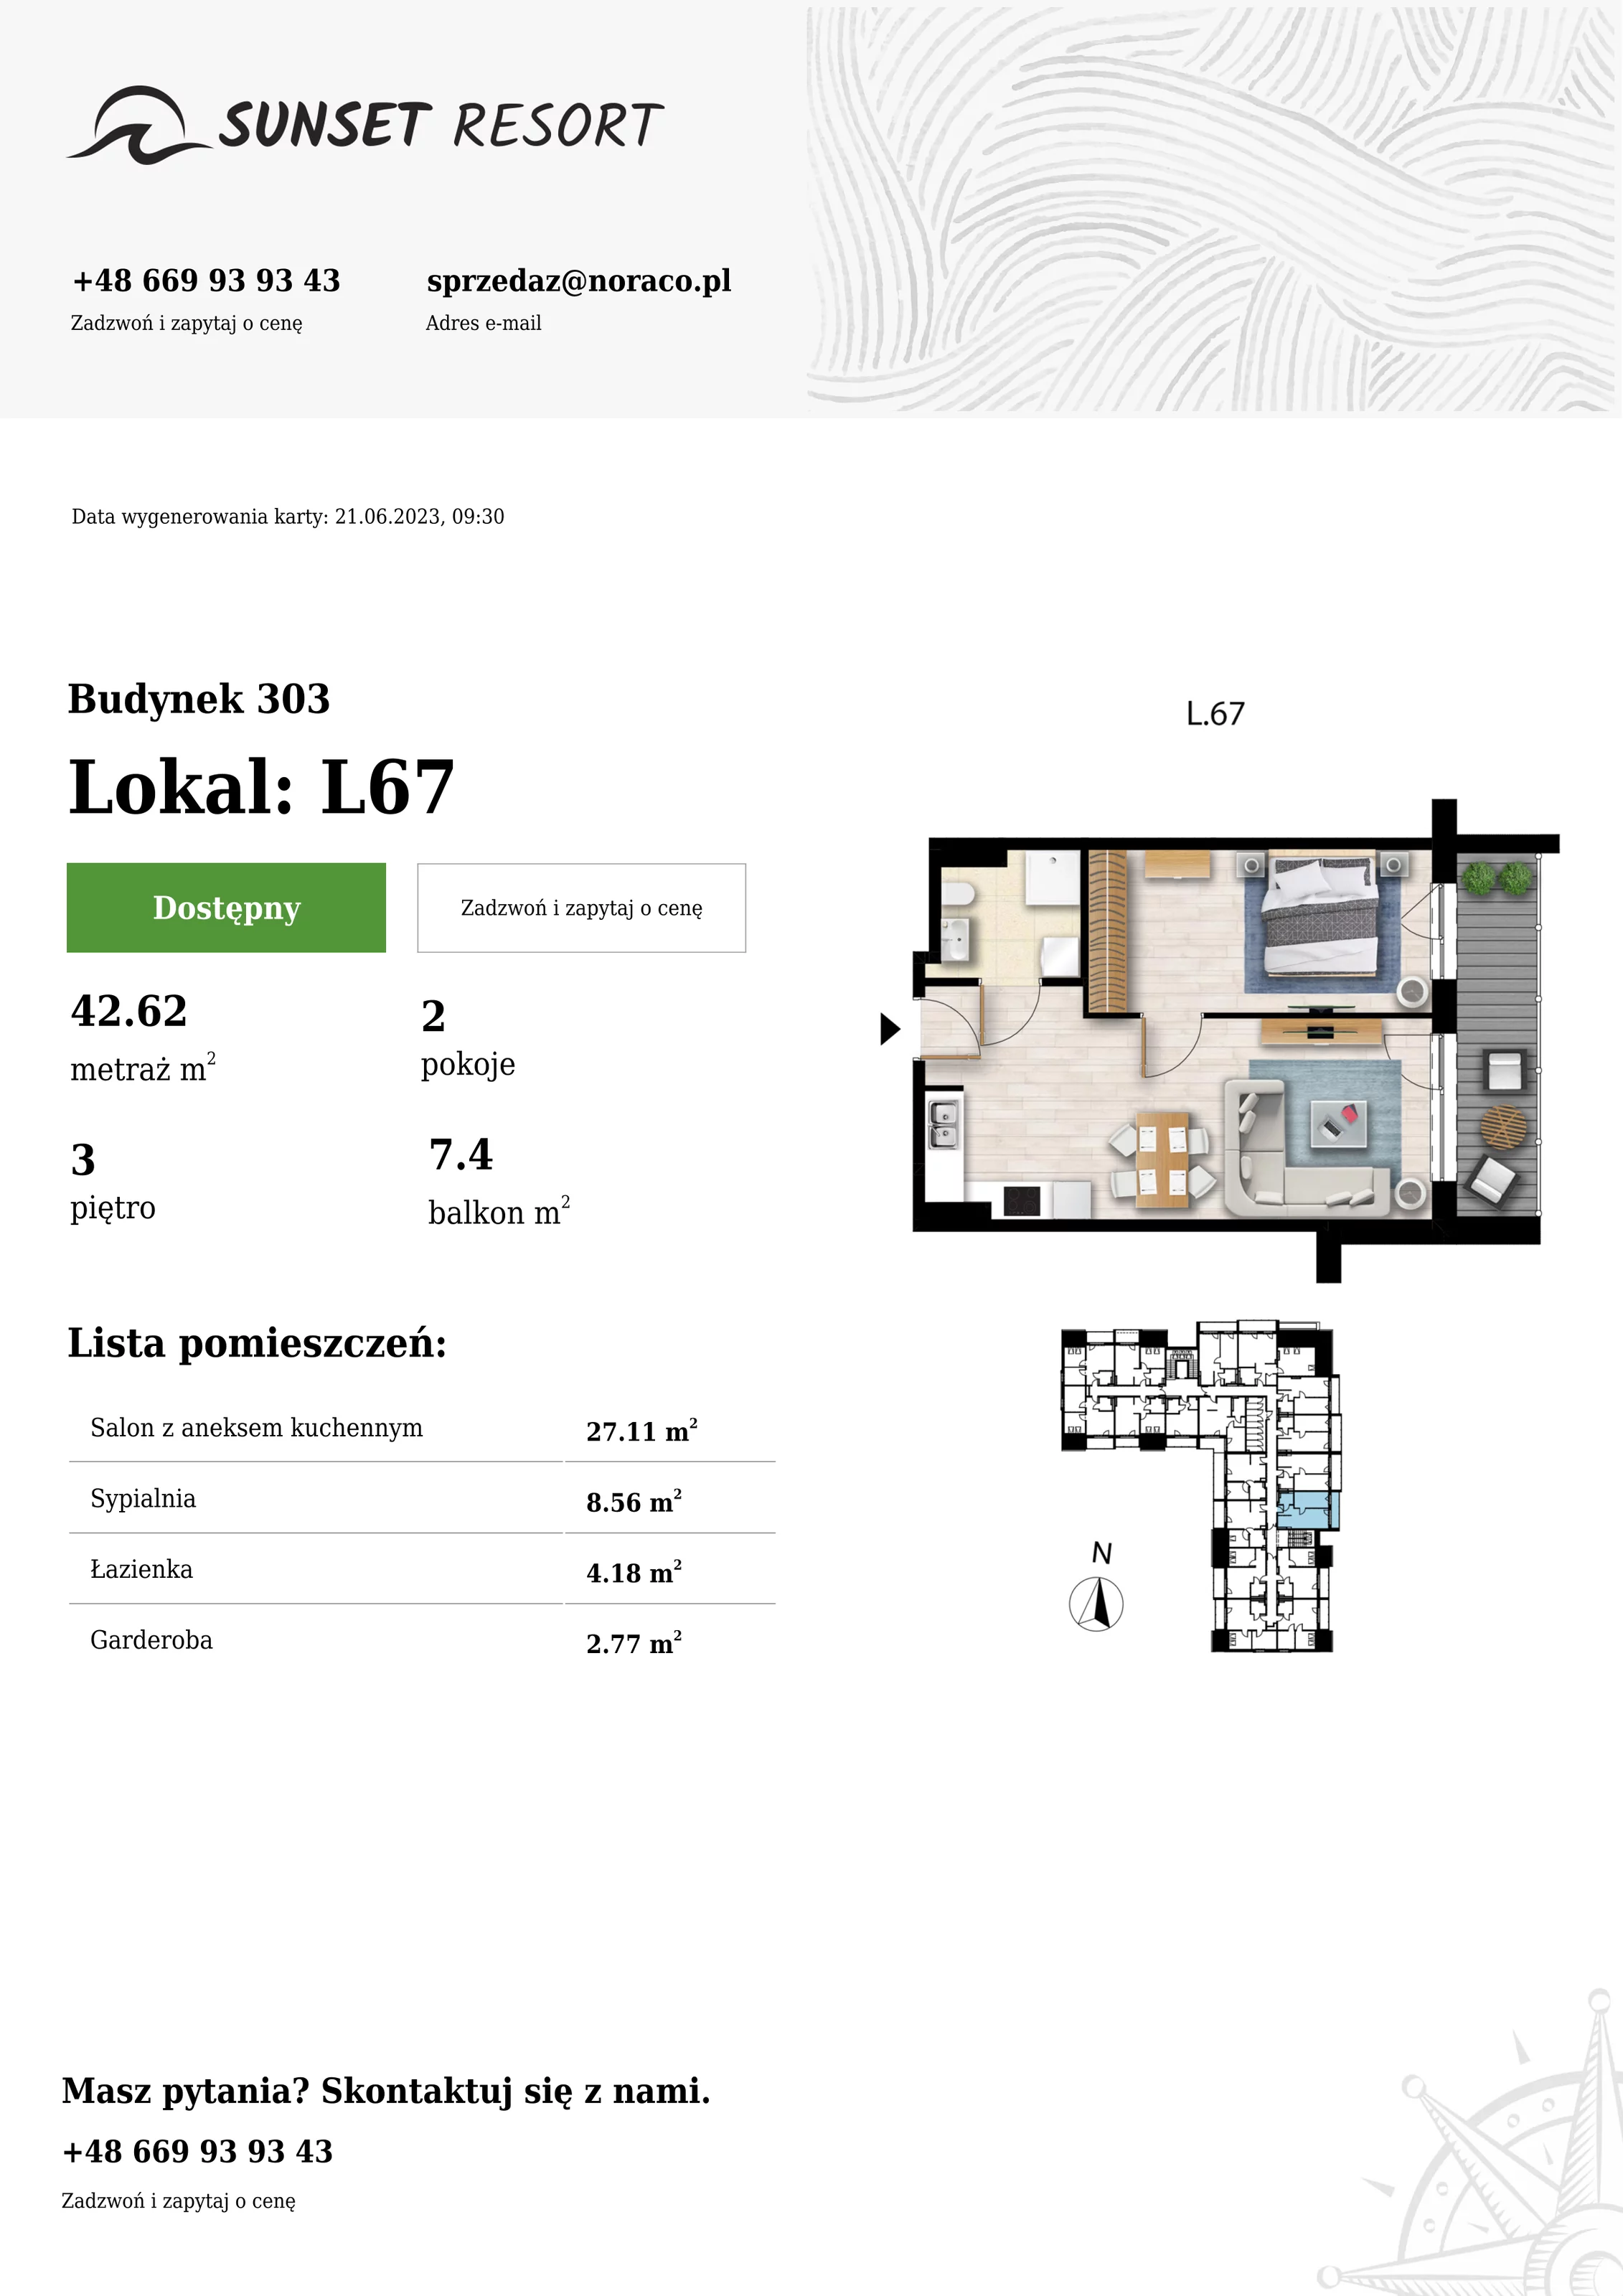 Apartament 42,62 m², piętro 3, oferta nr L67, Sunset Resort, Grzybowo, ul. Nadmorska 106